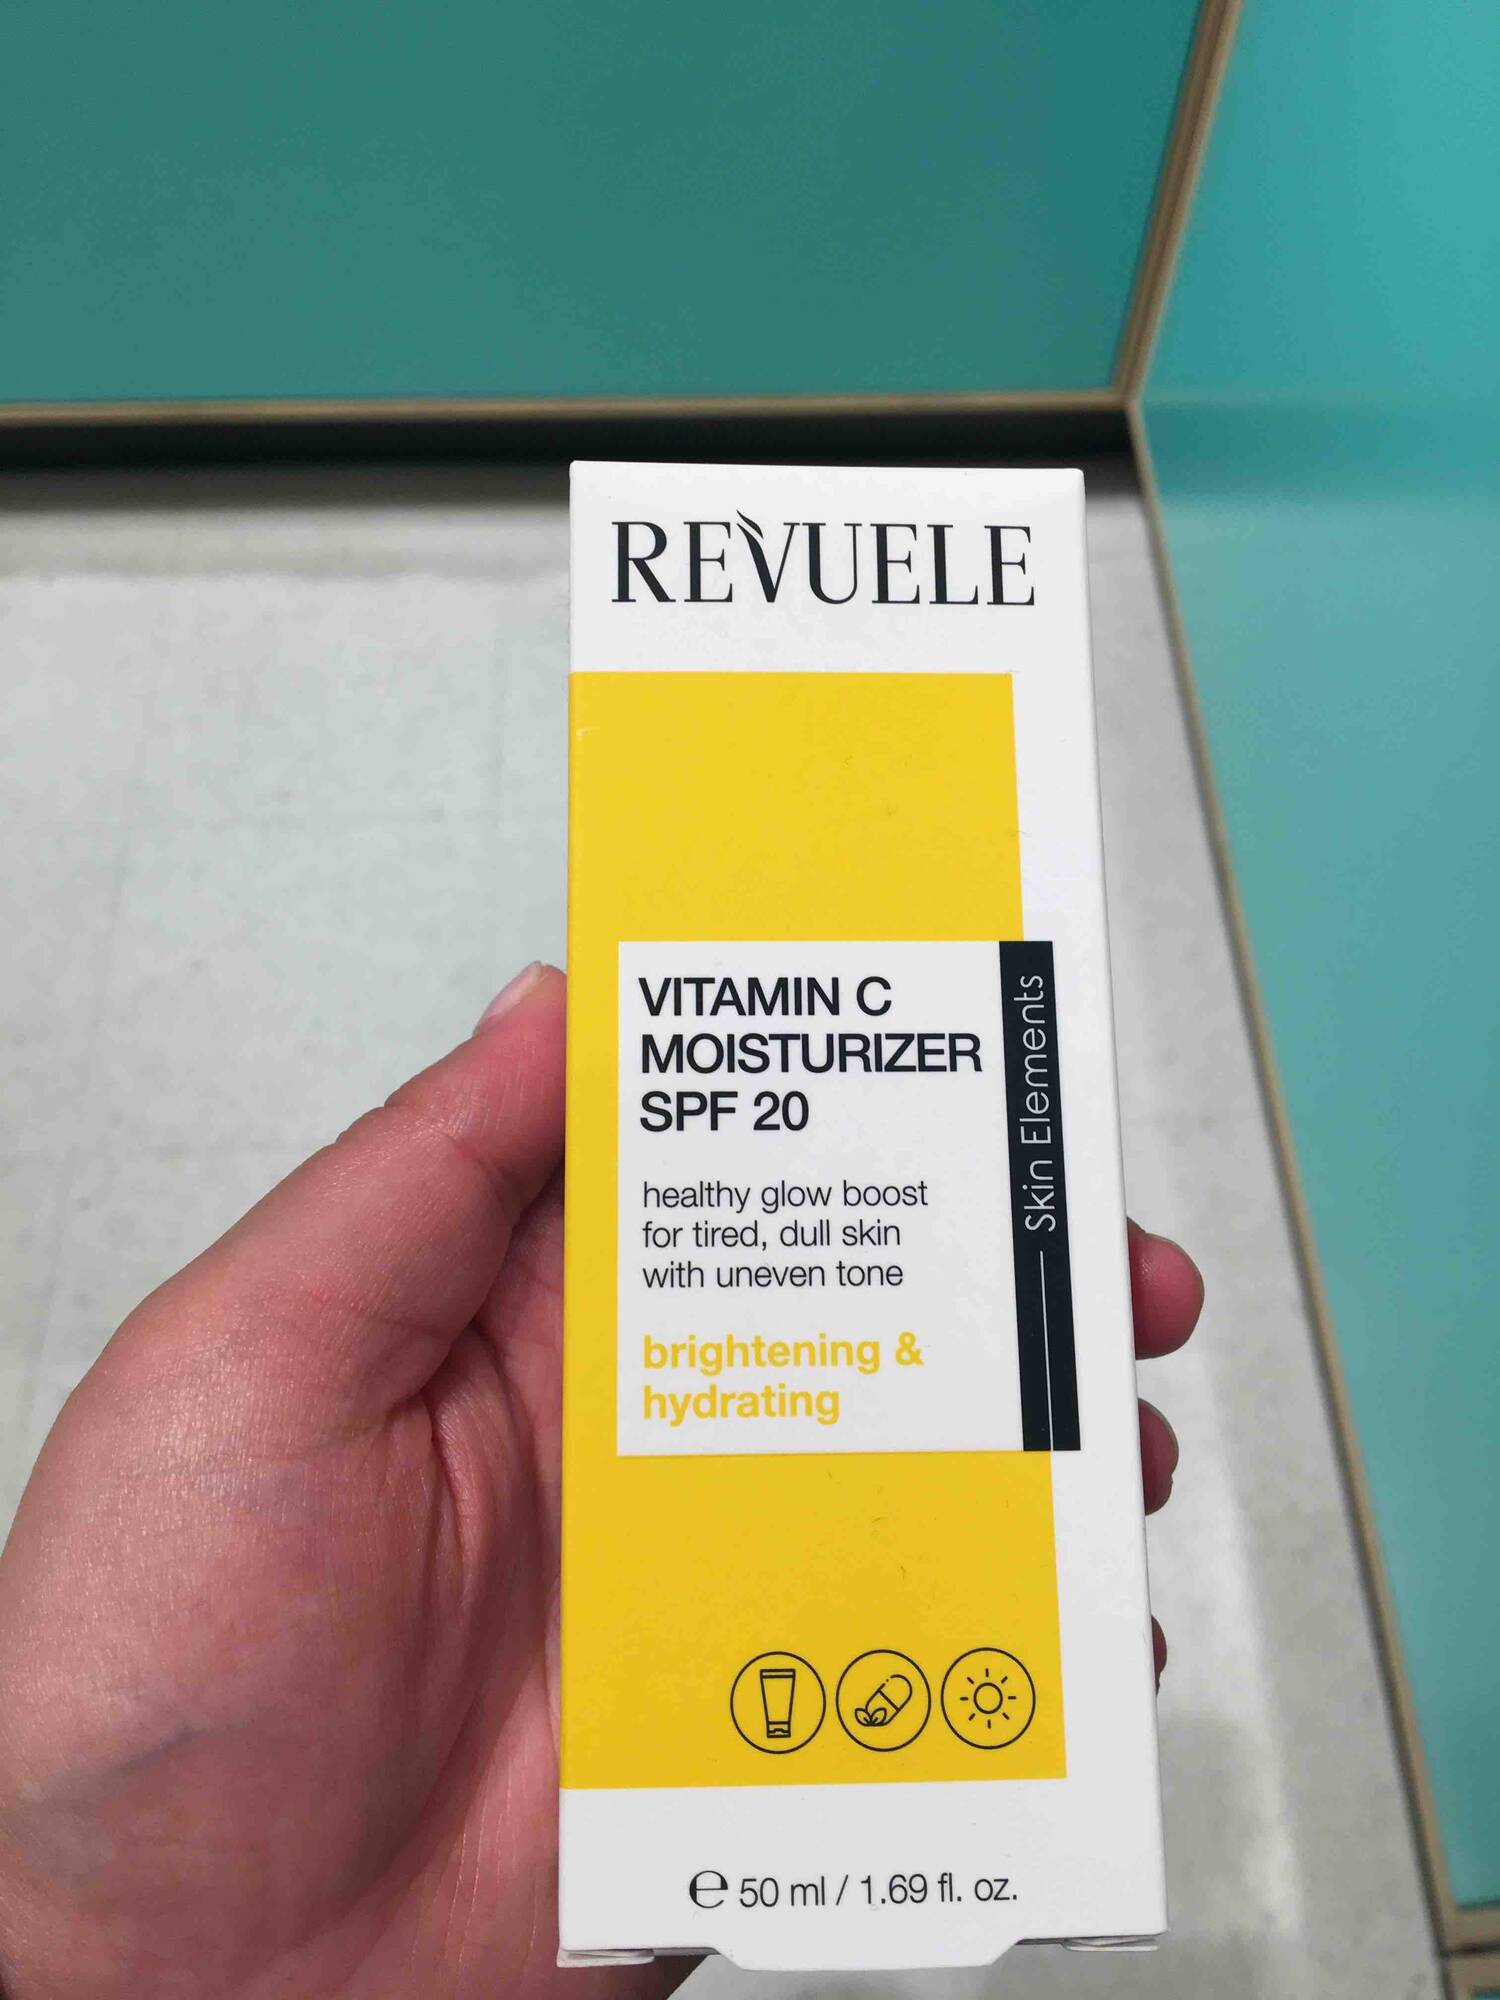 REVUELE - Vitamin C moisturizier SPF 20